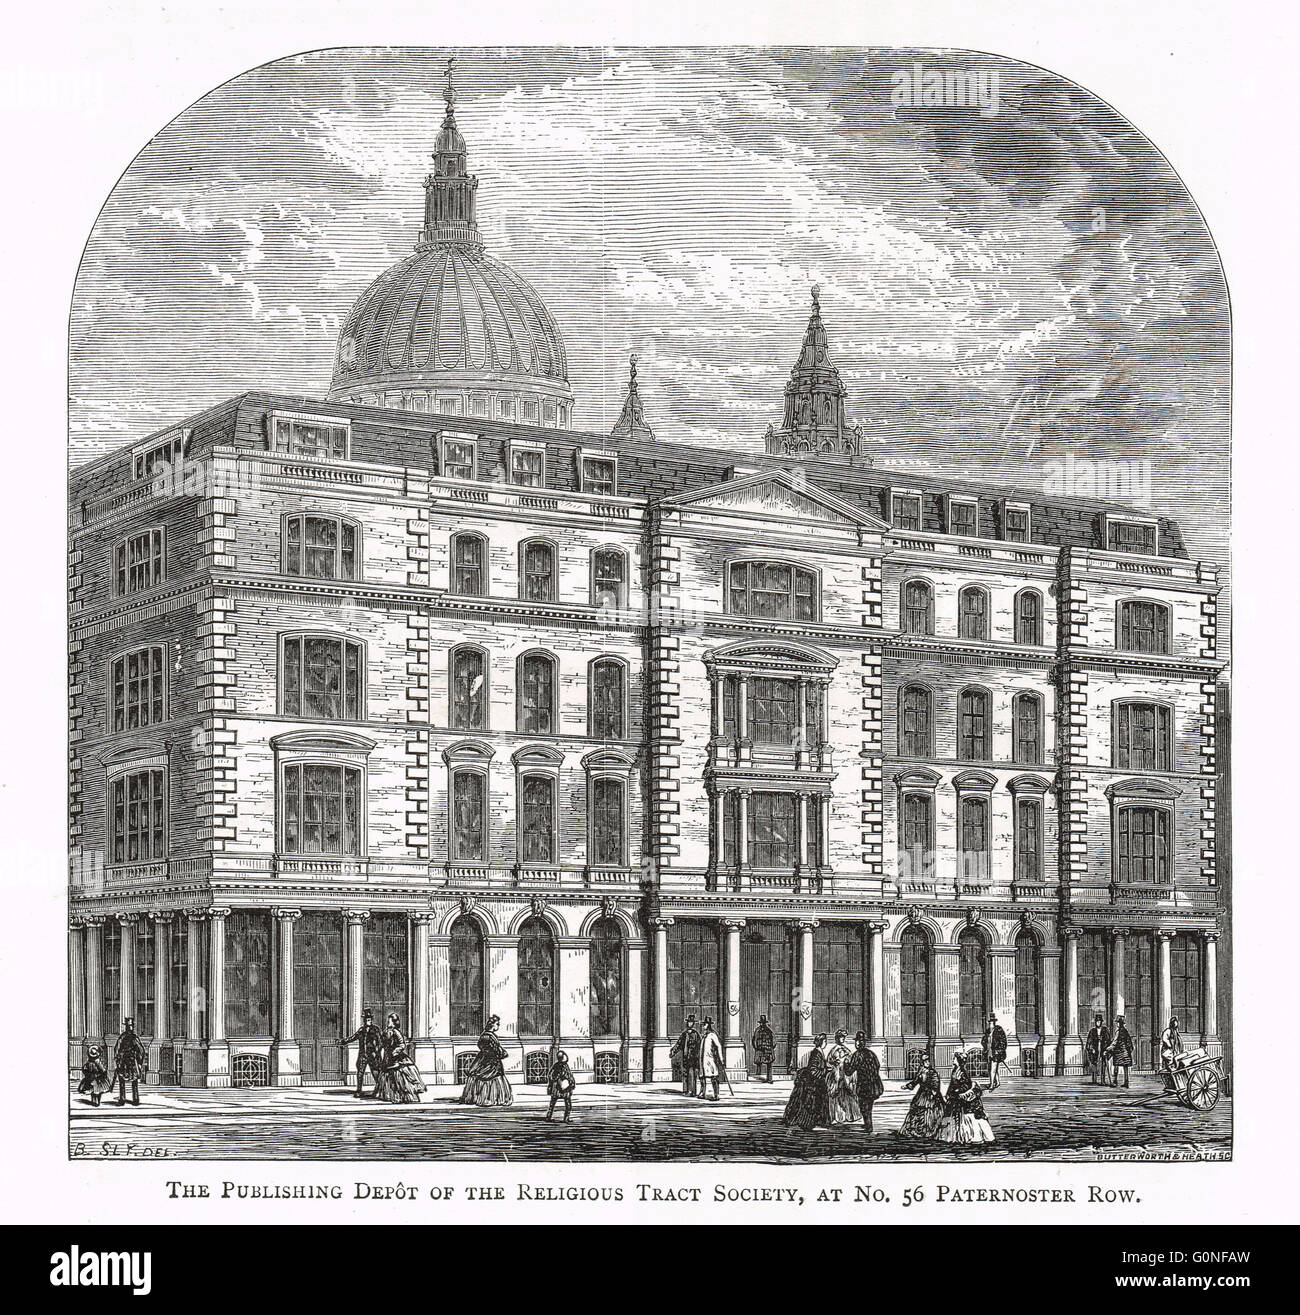 Der Verlag Depot der religiösen Tract Society, 56 Paternoster Row, London, England im 19. Jahrhundert Stockfoto